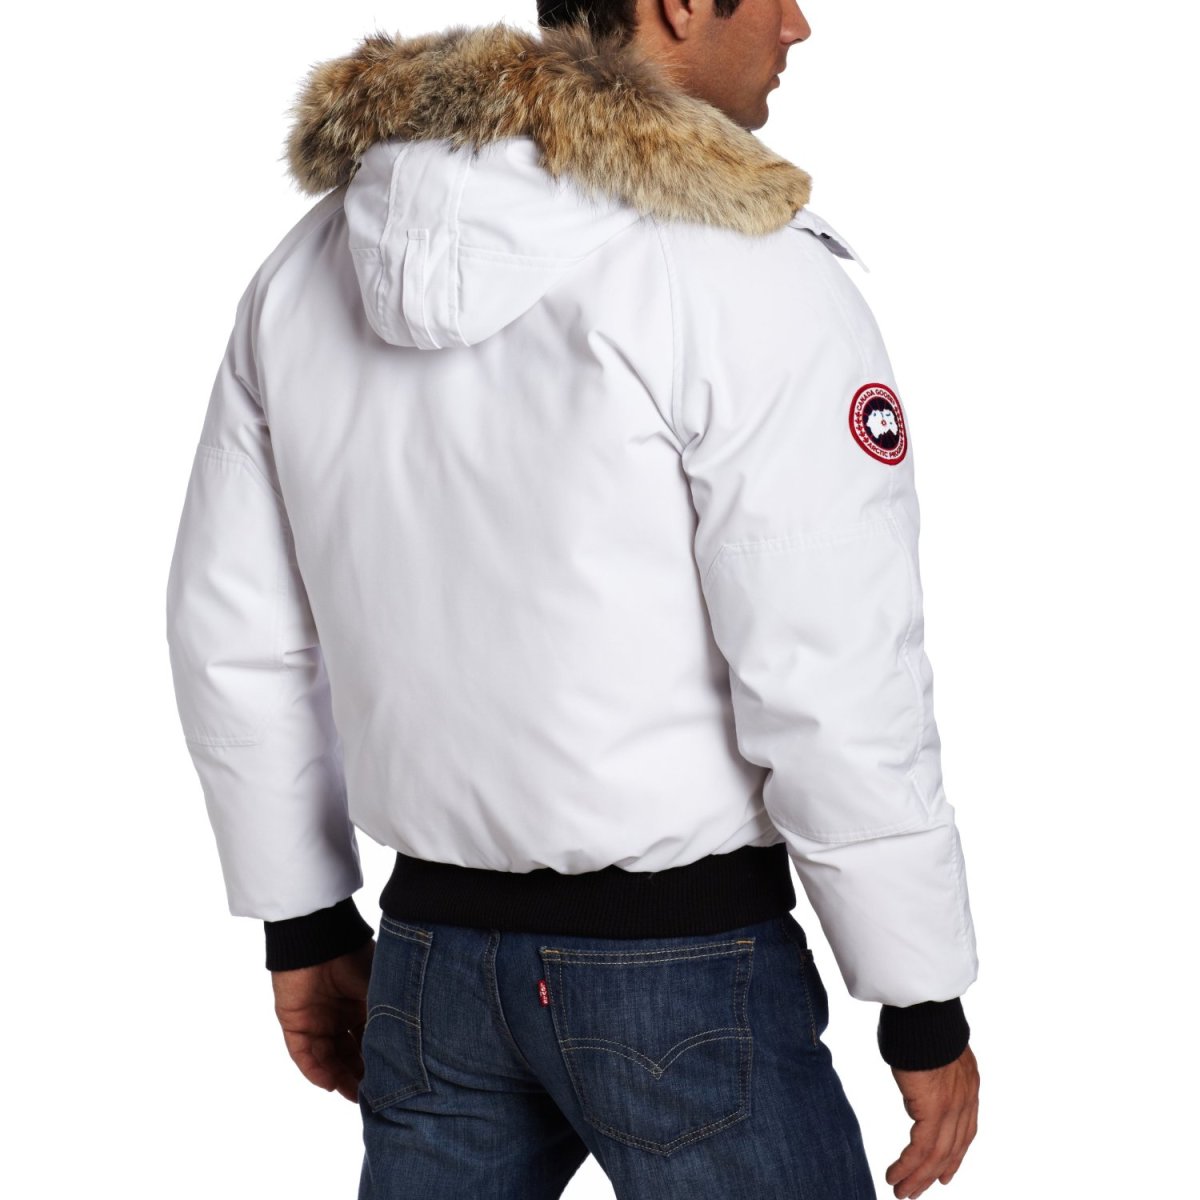 strongmens canada goose jackets